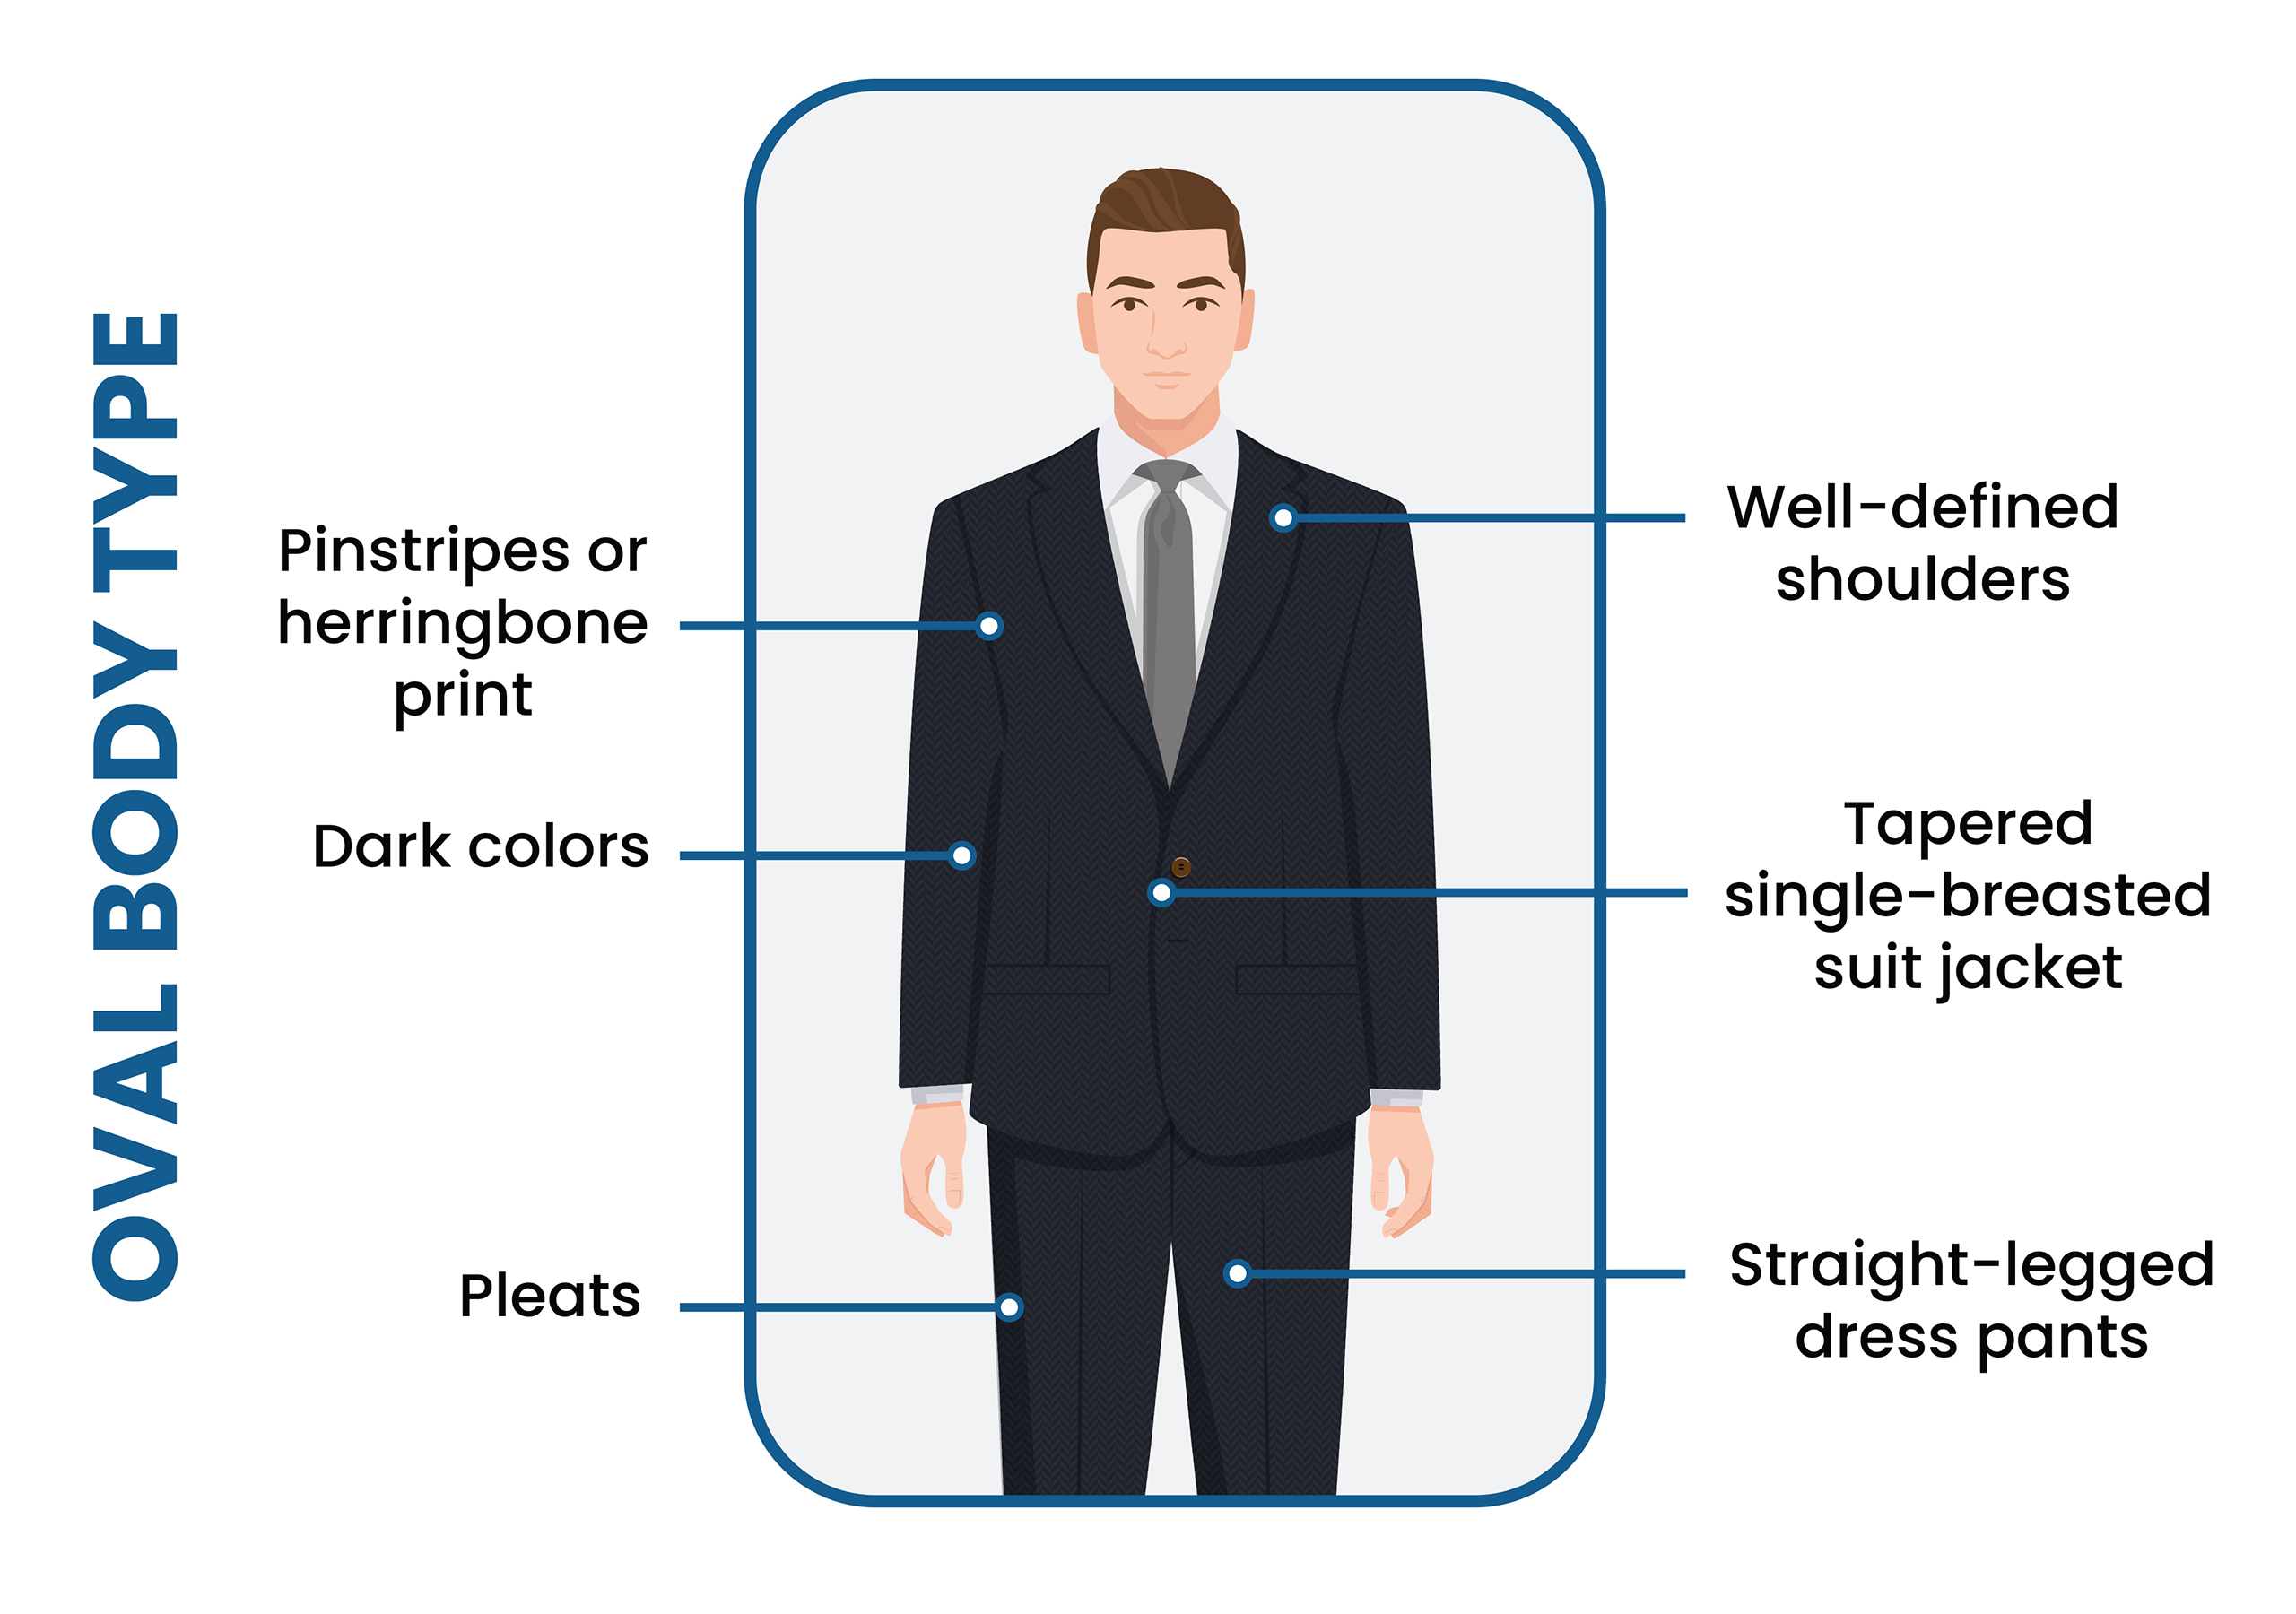 Men's Body Shape Analysis to dress better according to body type.